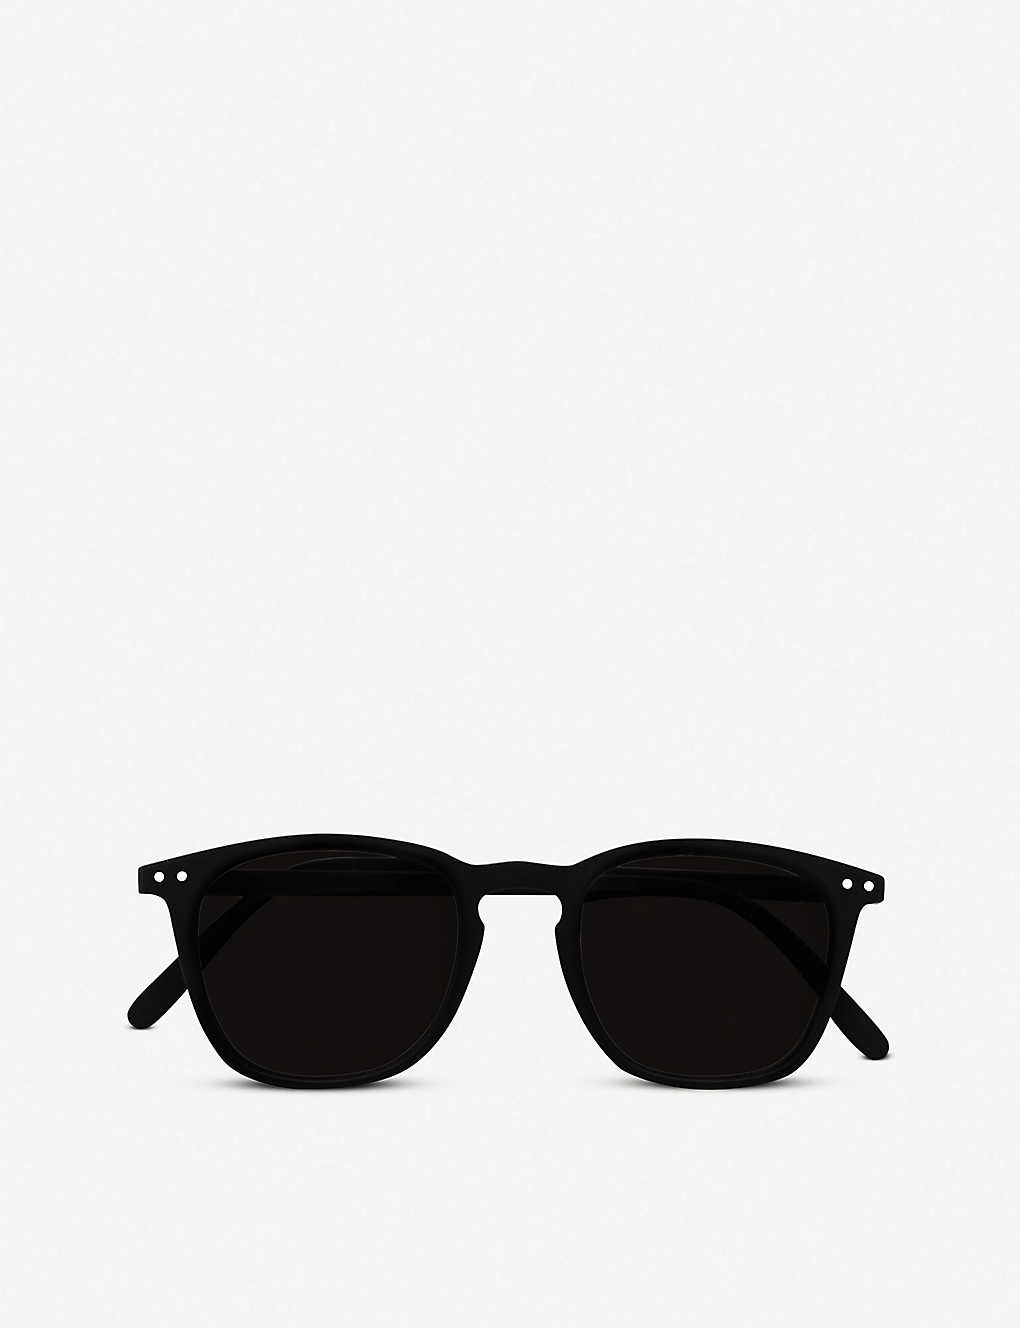 Shop Izipizi #e-frame Acetate Reading Sunglasses +1.50